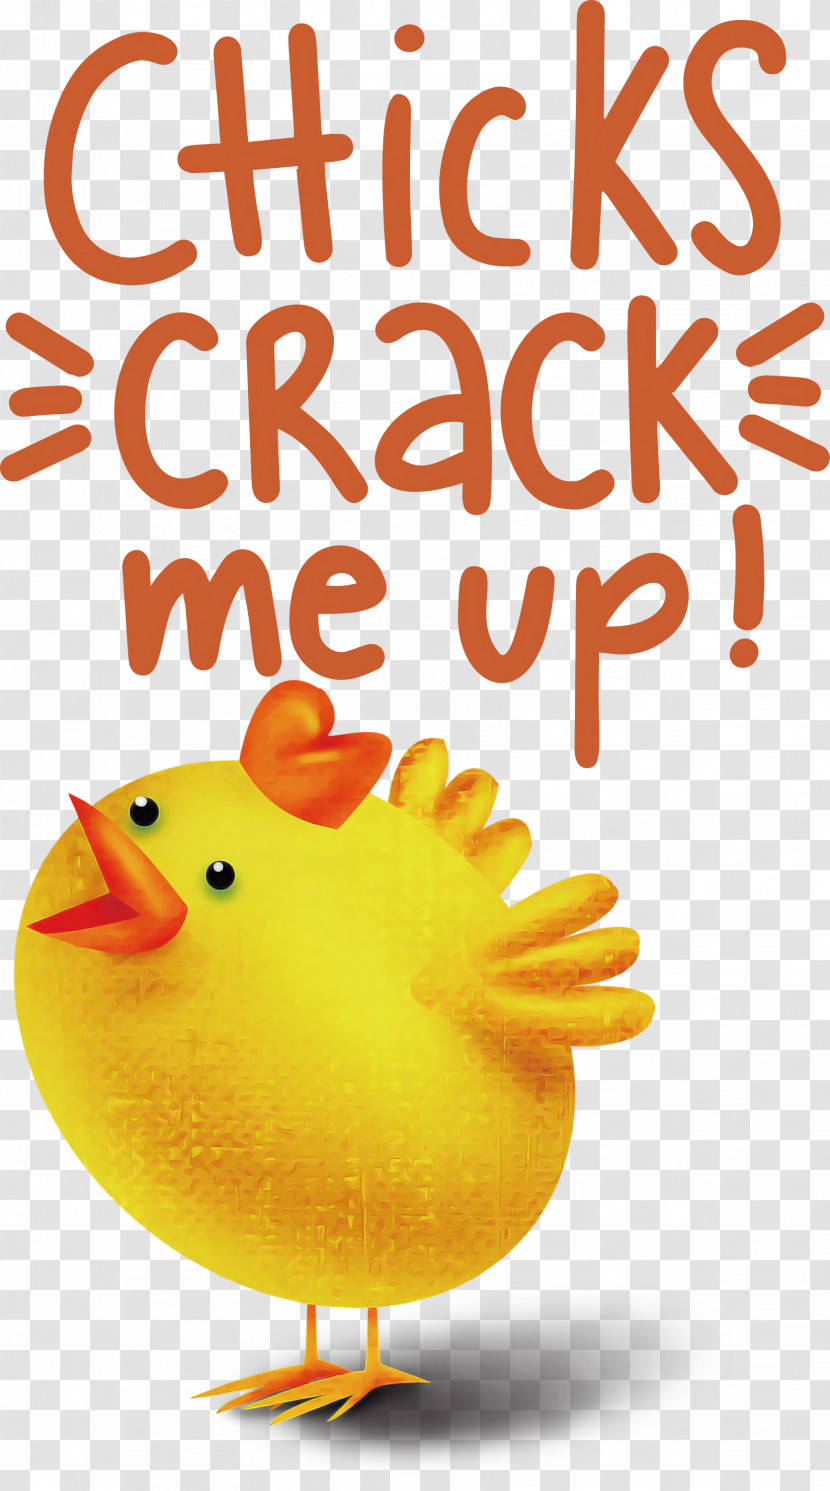 Chicks Crack Me Up Easter Day Happy Easter Transparent PNG